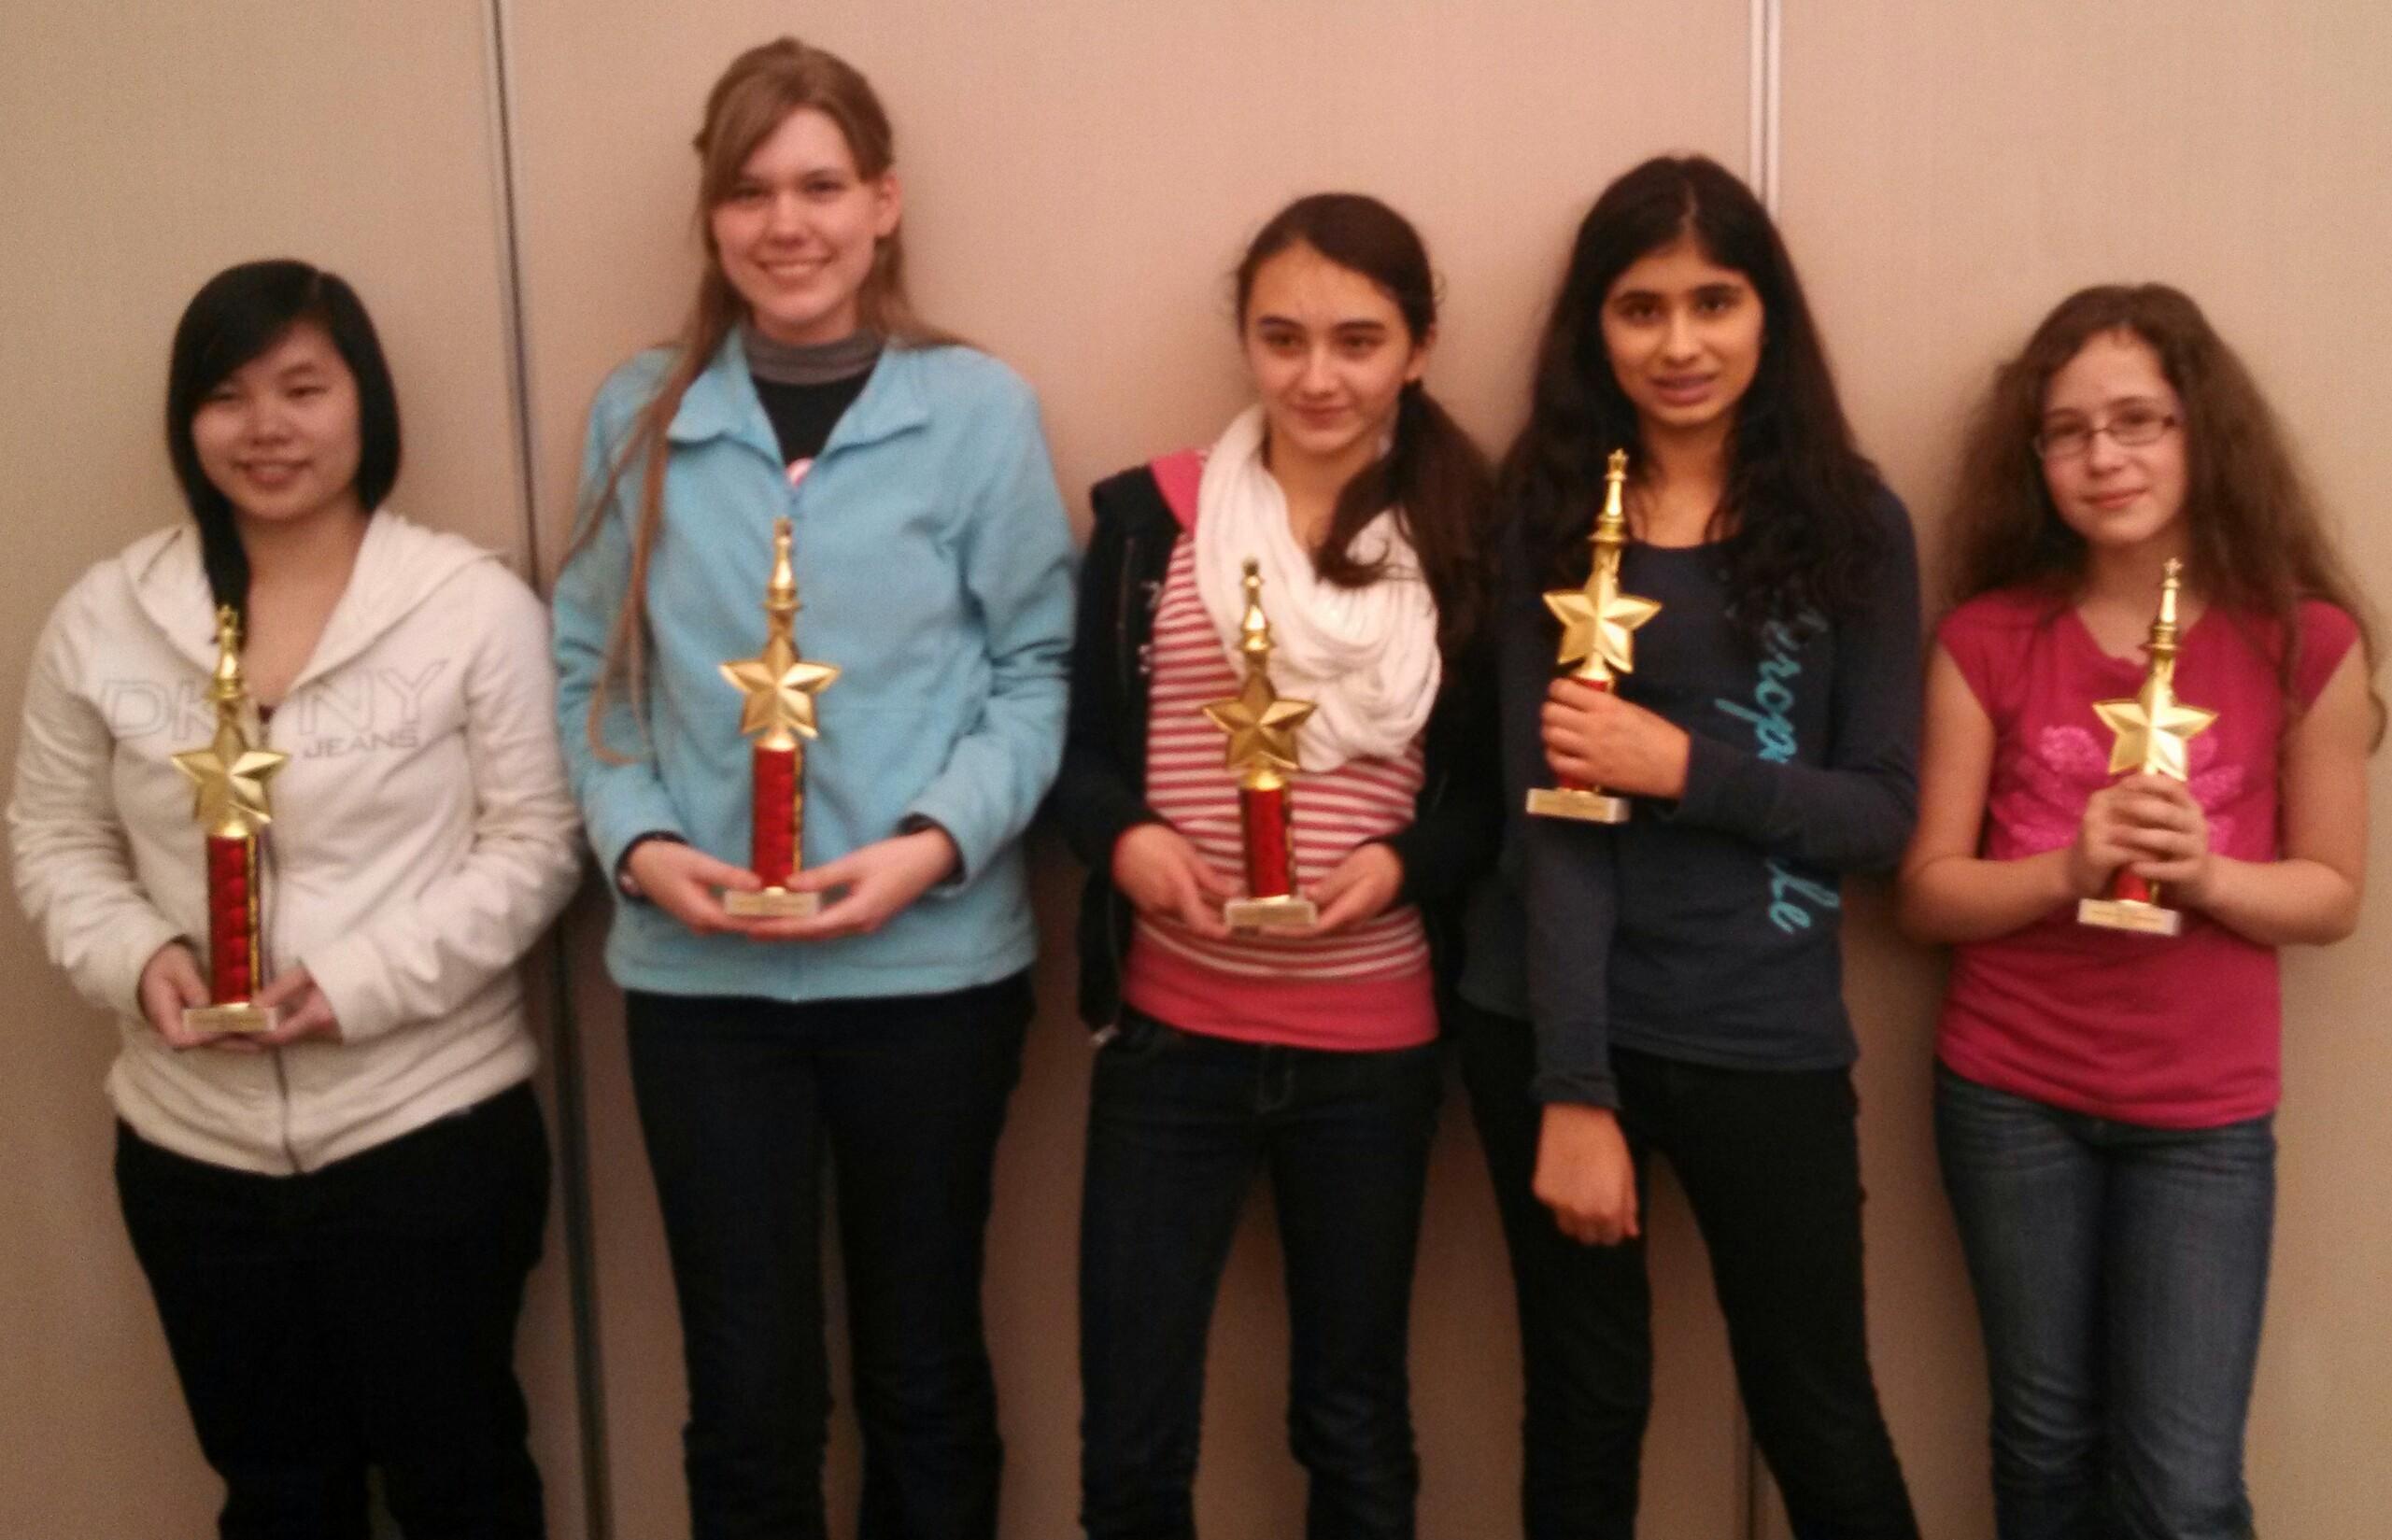 Top 5 winners: L to R: Becca Lampman, Sarah May, Olga Cherapakhin, Sangeeta Dhingra, Naomi Bashkansky 